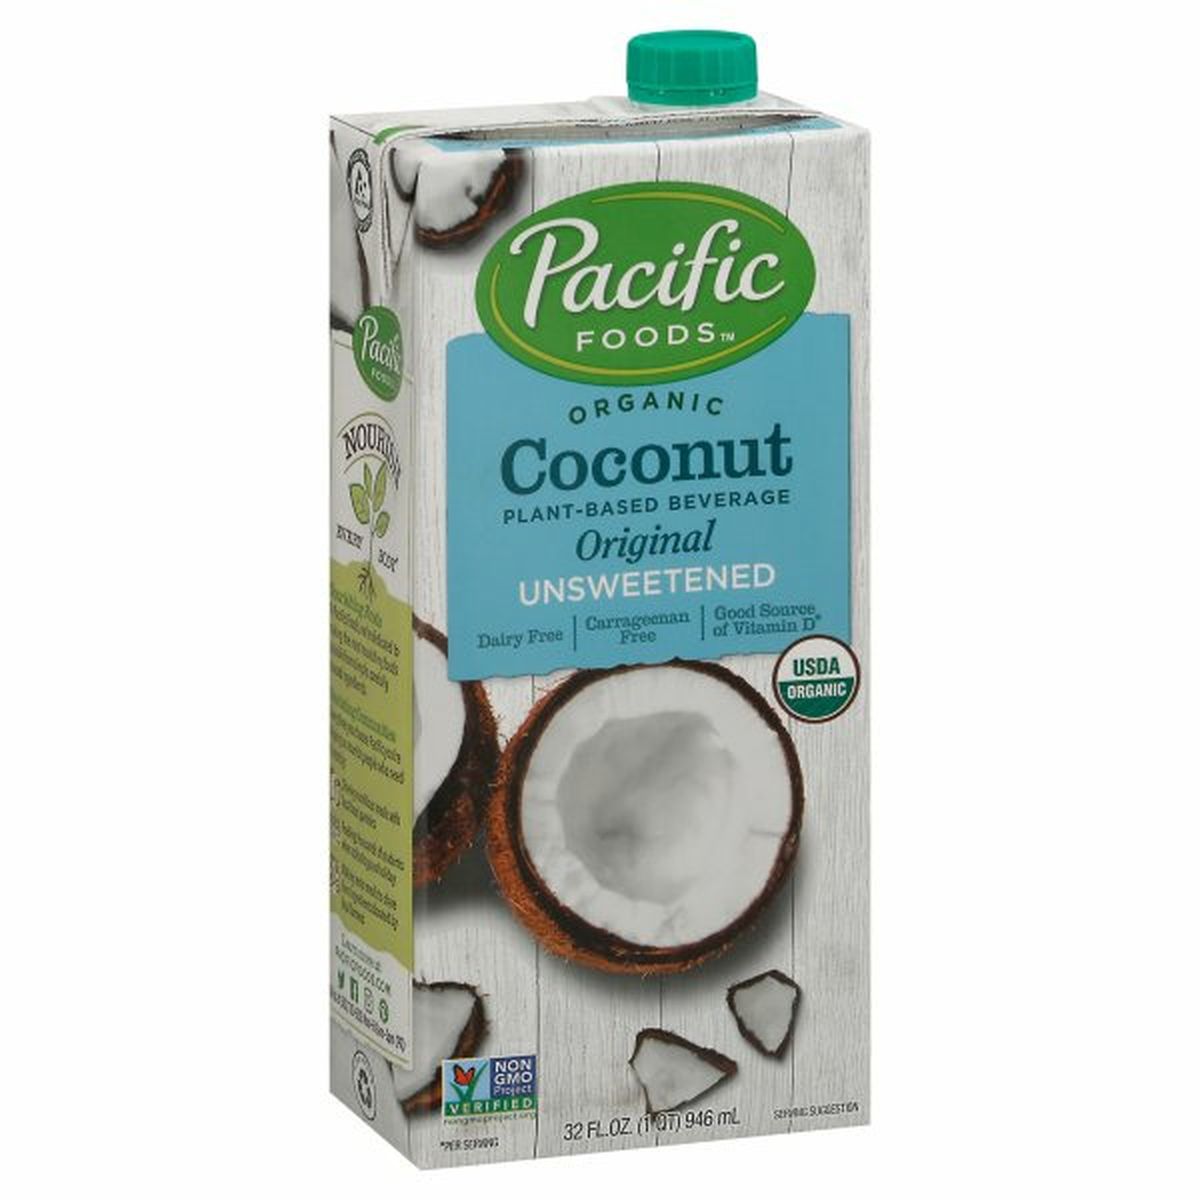 Calories in Pacific Coconut Beverage, Organic, Unsweetened, Original